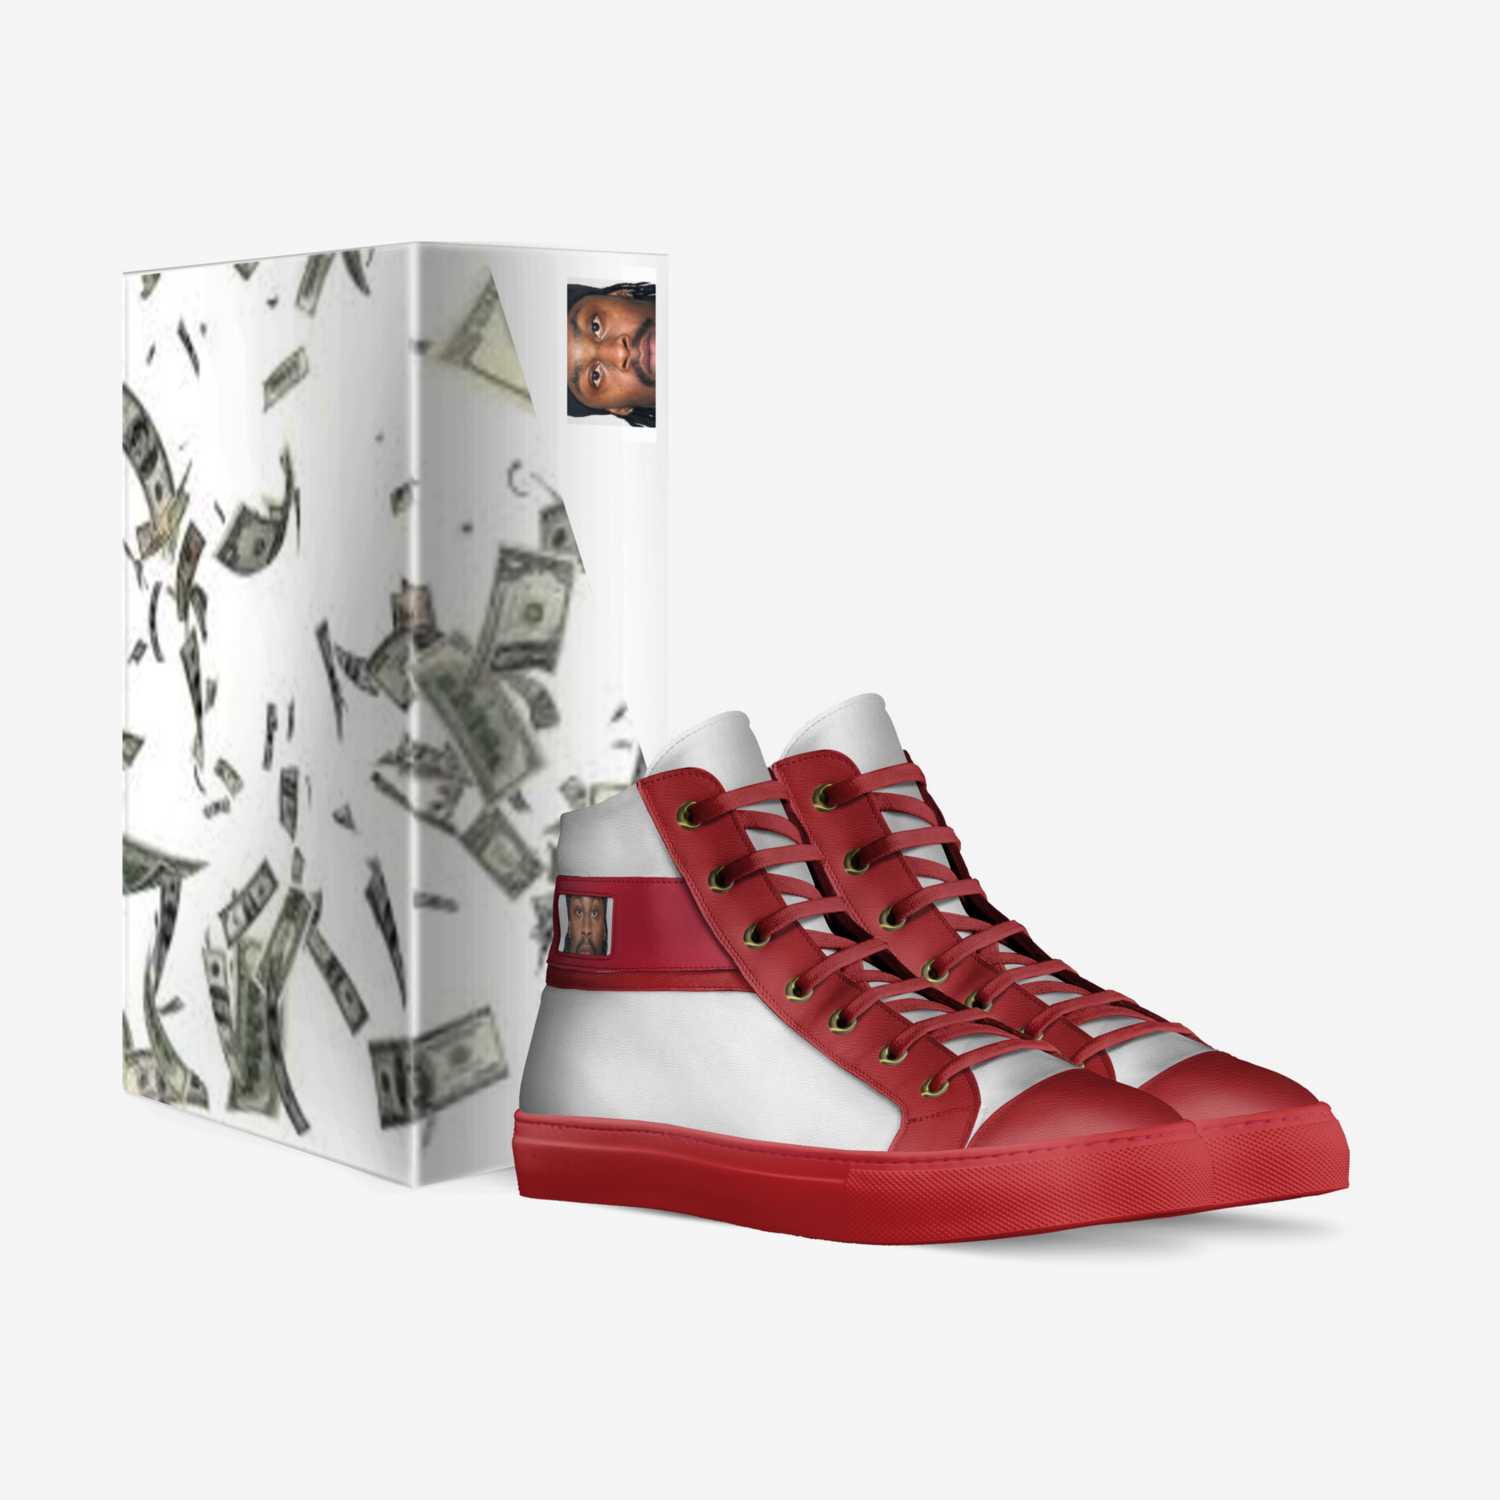 Inurmom custom made in Italy shoes by Dick Inurmom | Box view